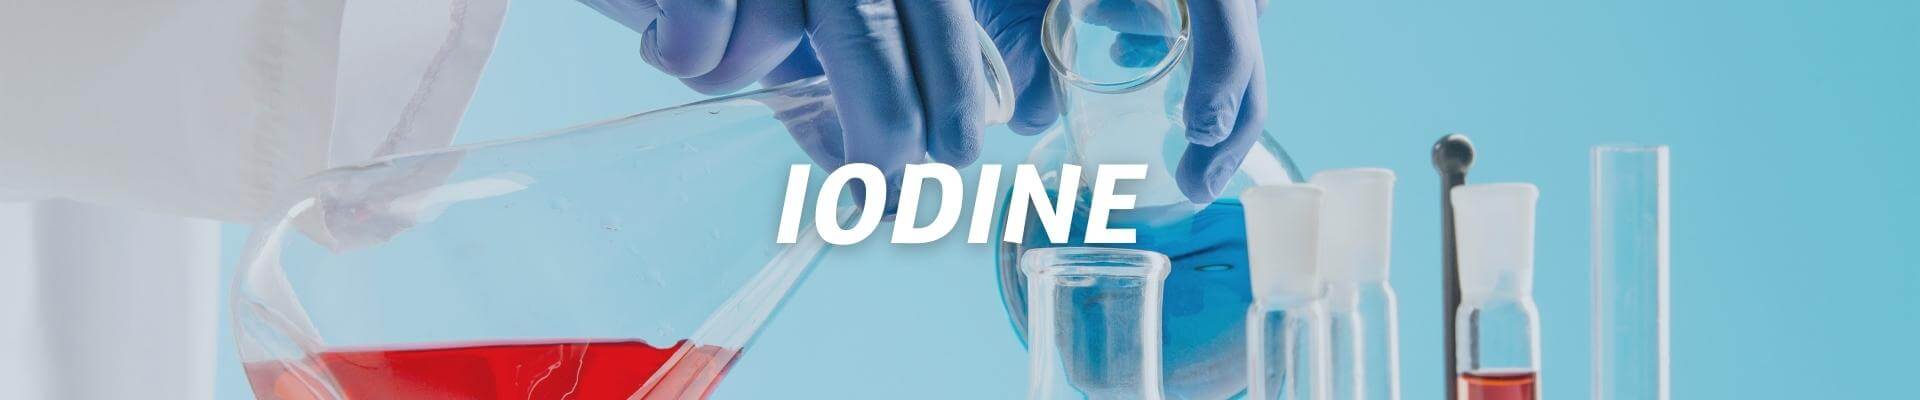 iodine-banner